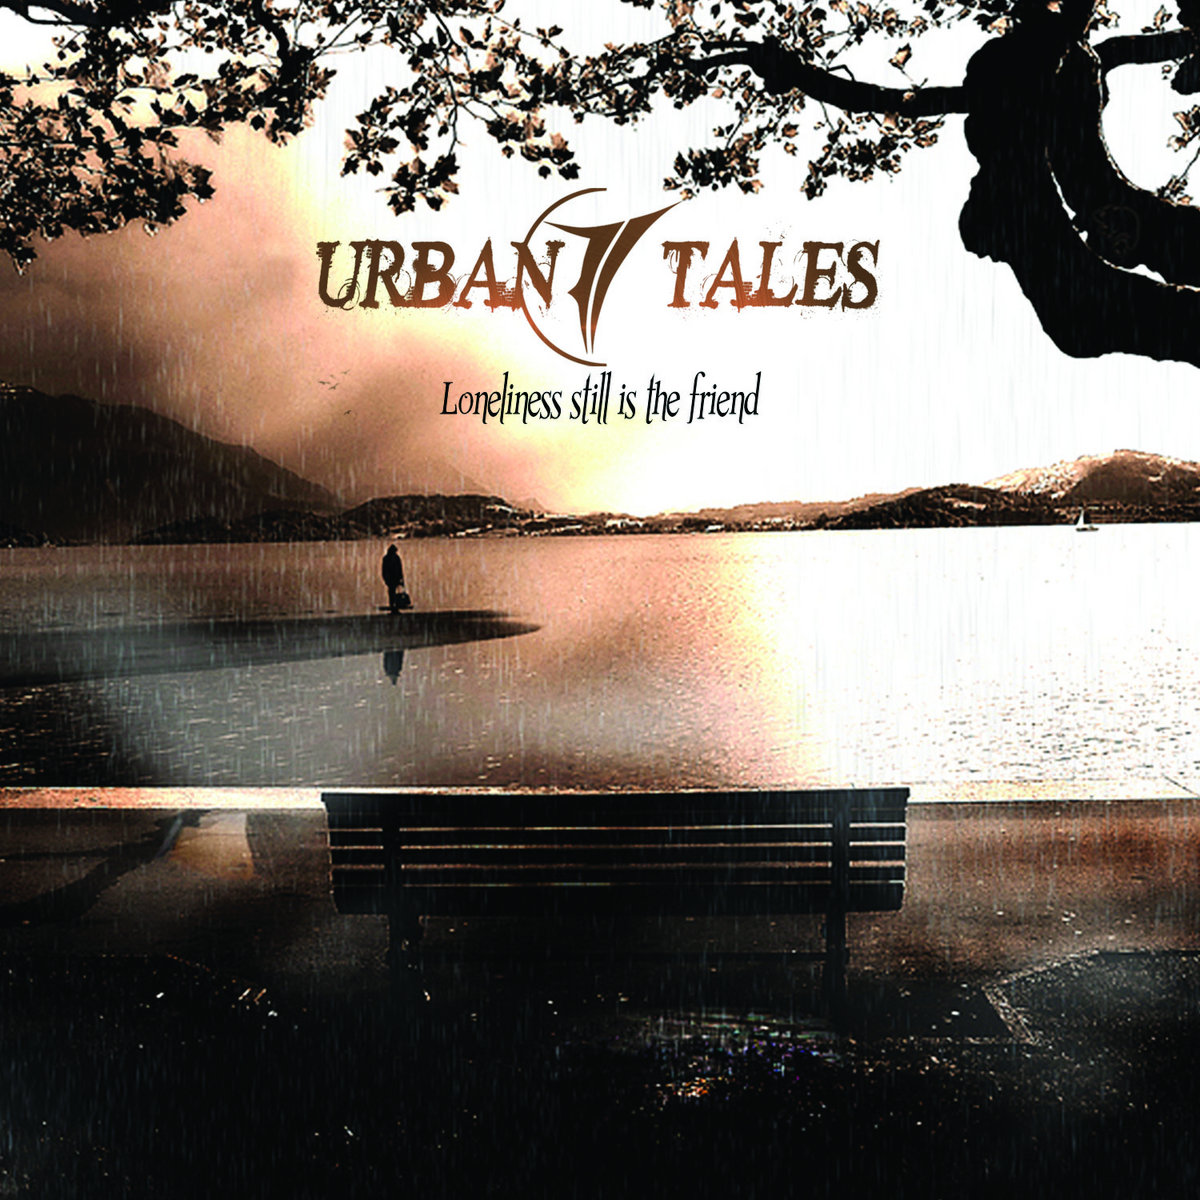 urban tale full movie online